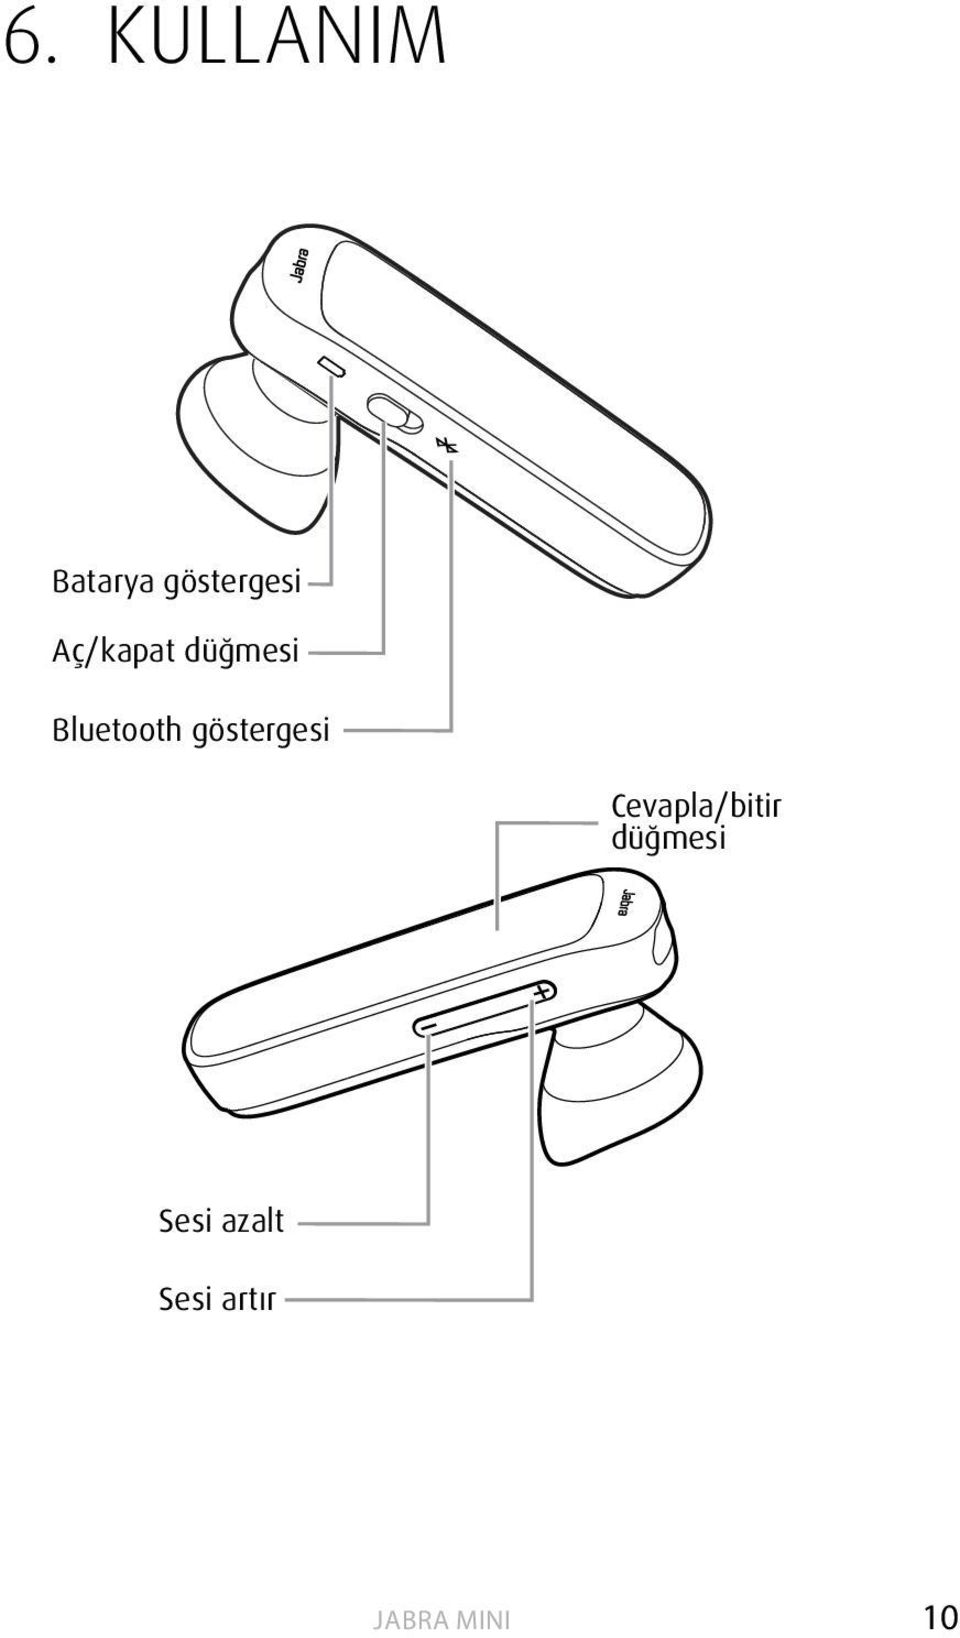 Bluetooth göstergesi